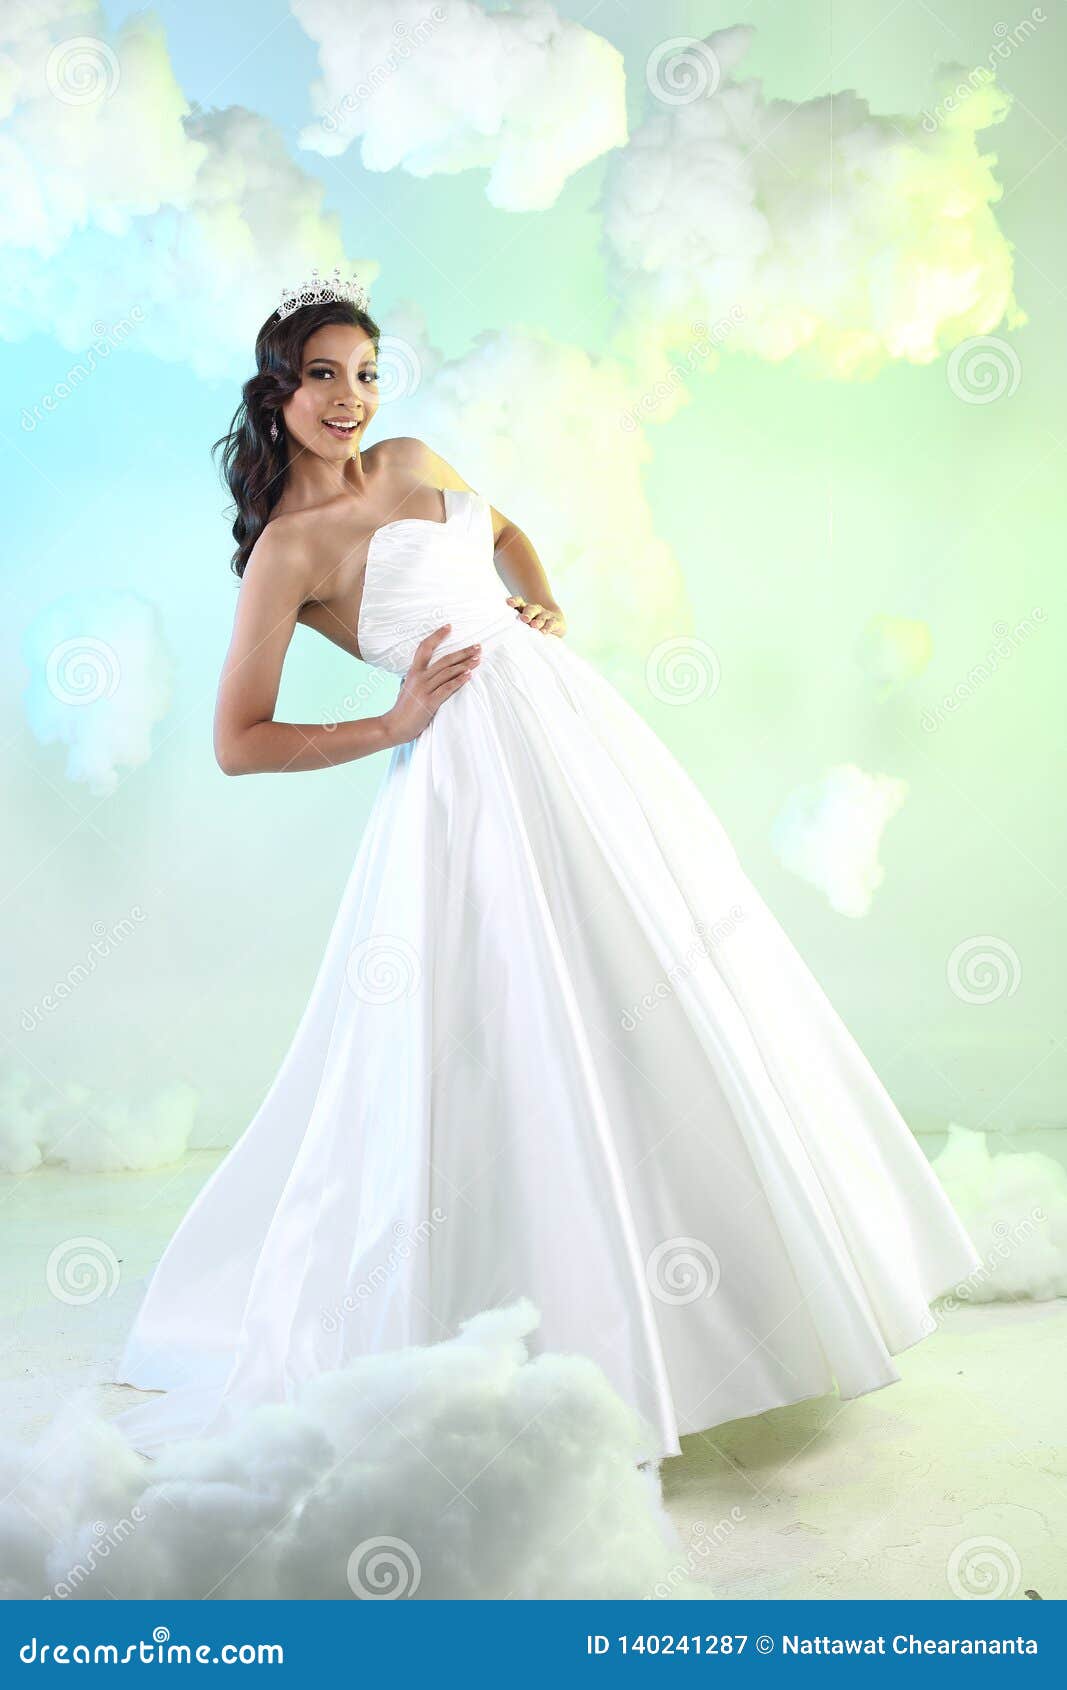 https://thumbs.dreamstime.com/z/lovely-asian-beautiful-woman-bride-white-wedding-caucasian-gown-dress-lace-veil-black-hair-studio-lighting-blue-gradient-140241287.jpg